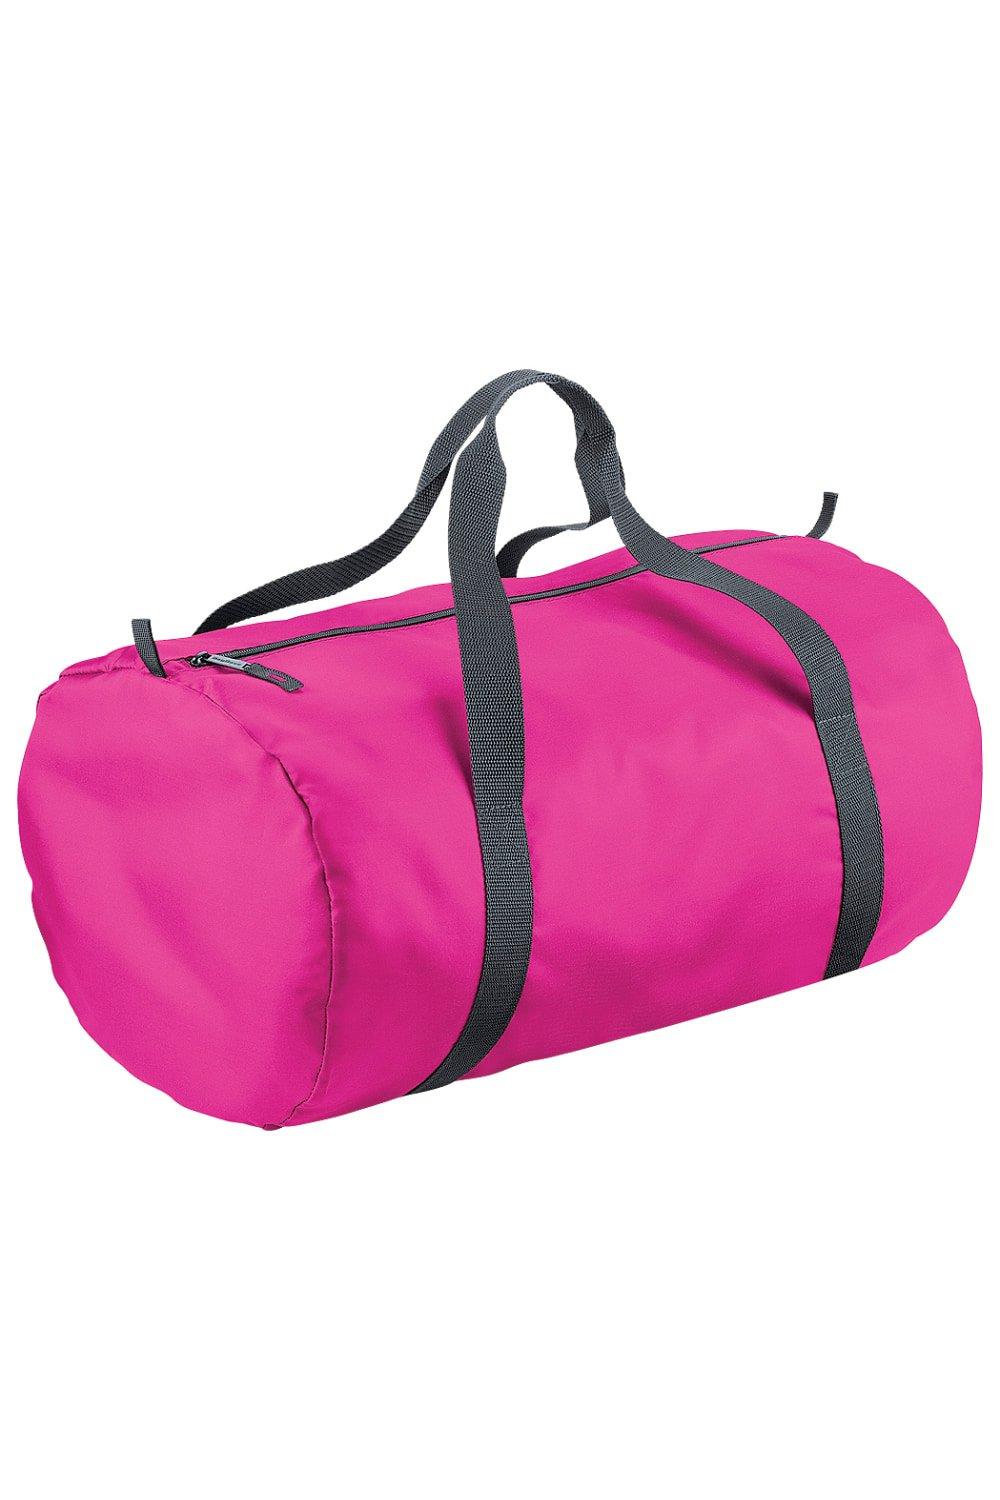 Водонепроницаемая дорожная сумка Packaway Barrel Bag / Duffle (32 литра) Bagbase, розовый